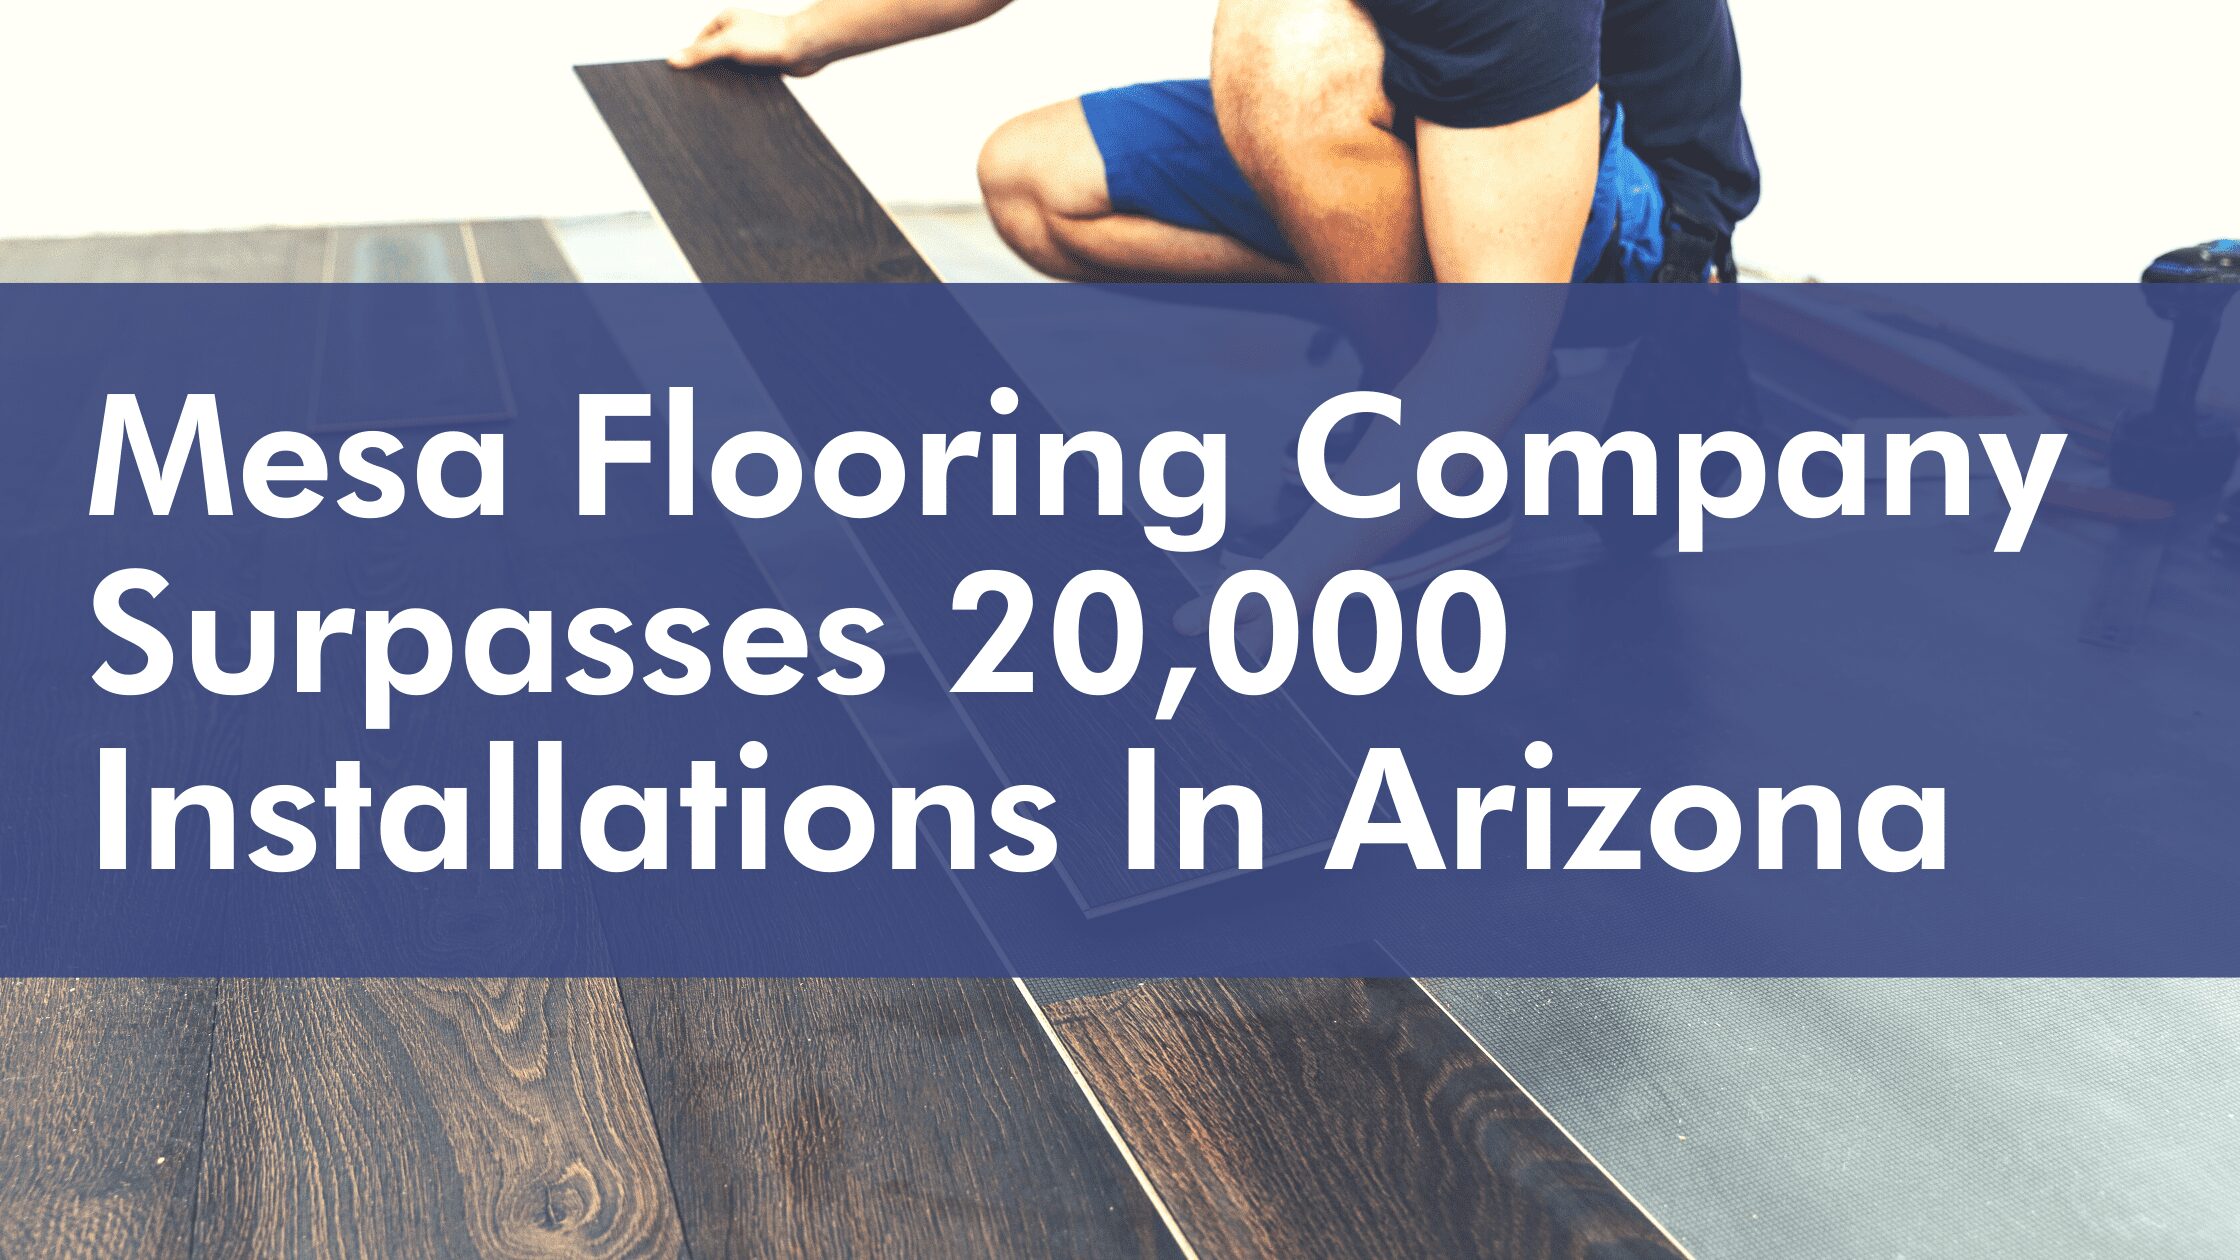 Mesa Flooring Company Surpasses 20,000 Installations In Arizona